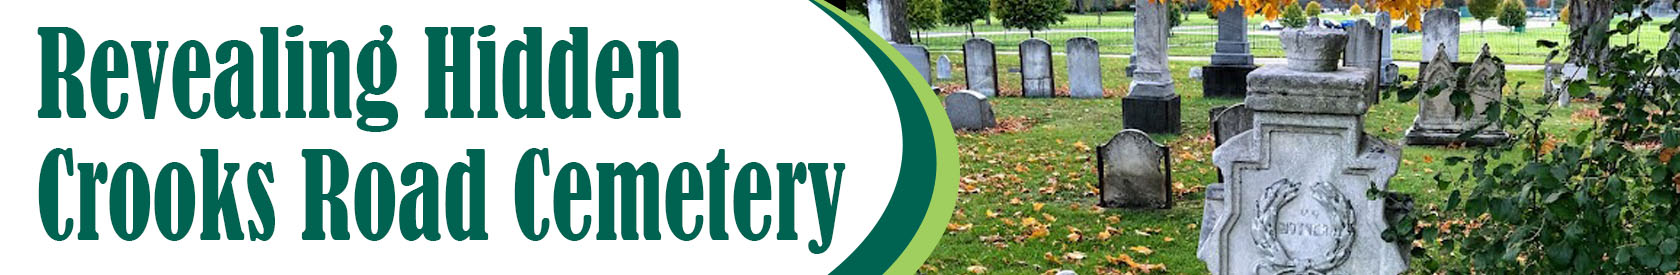 Revealing Hidden Crooks Road Cemetery  